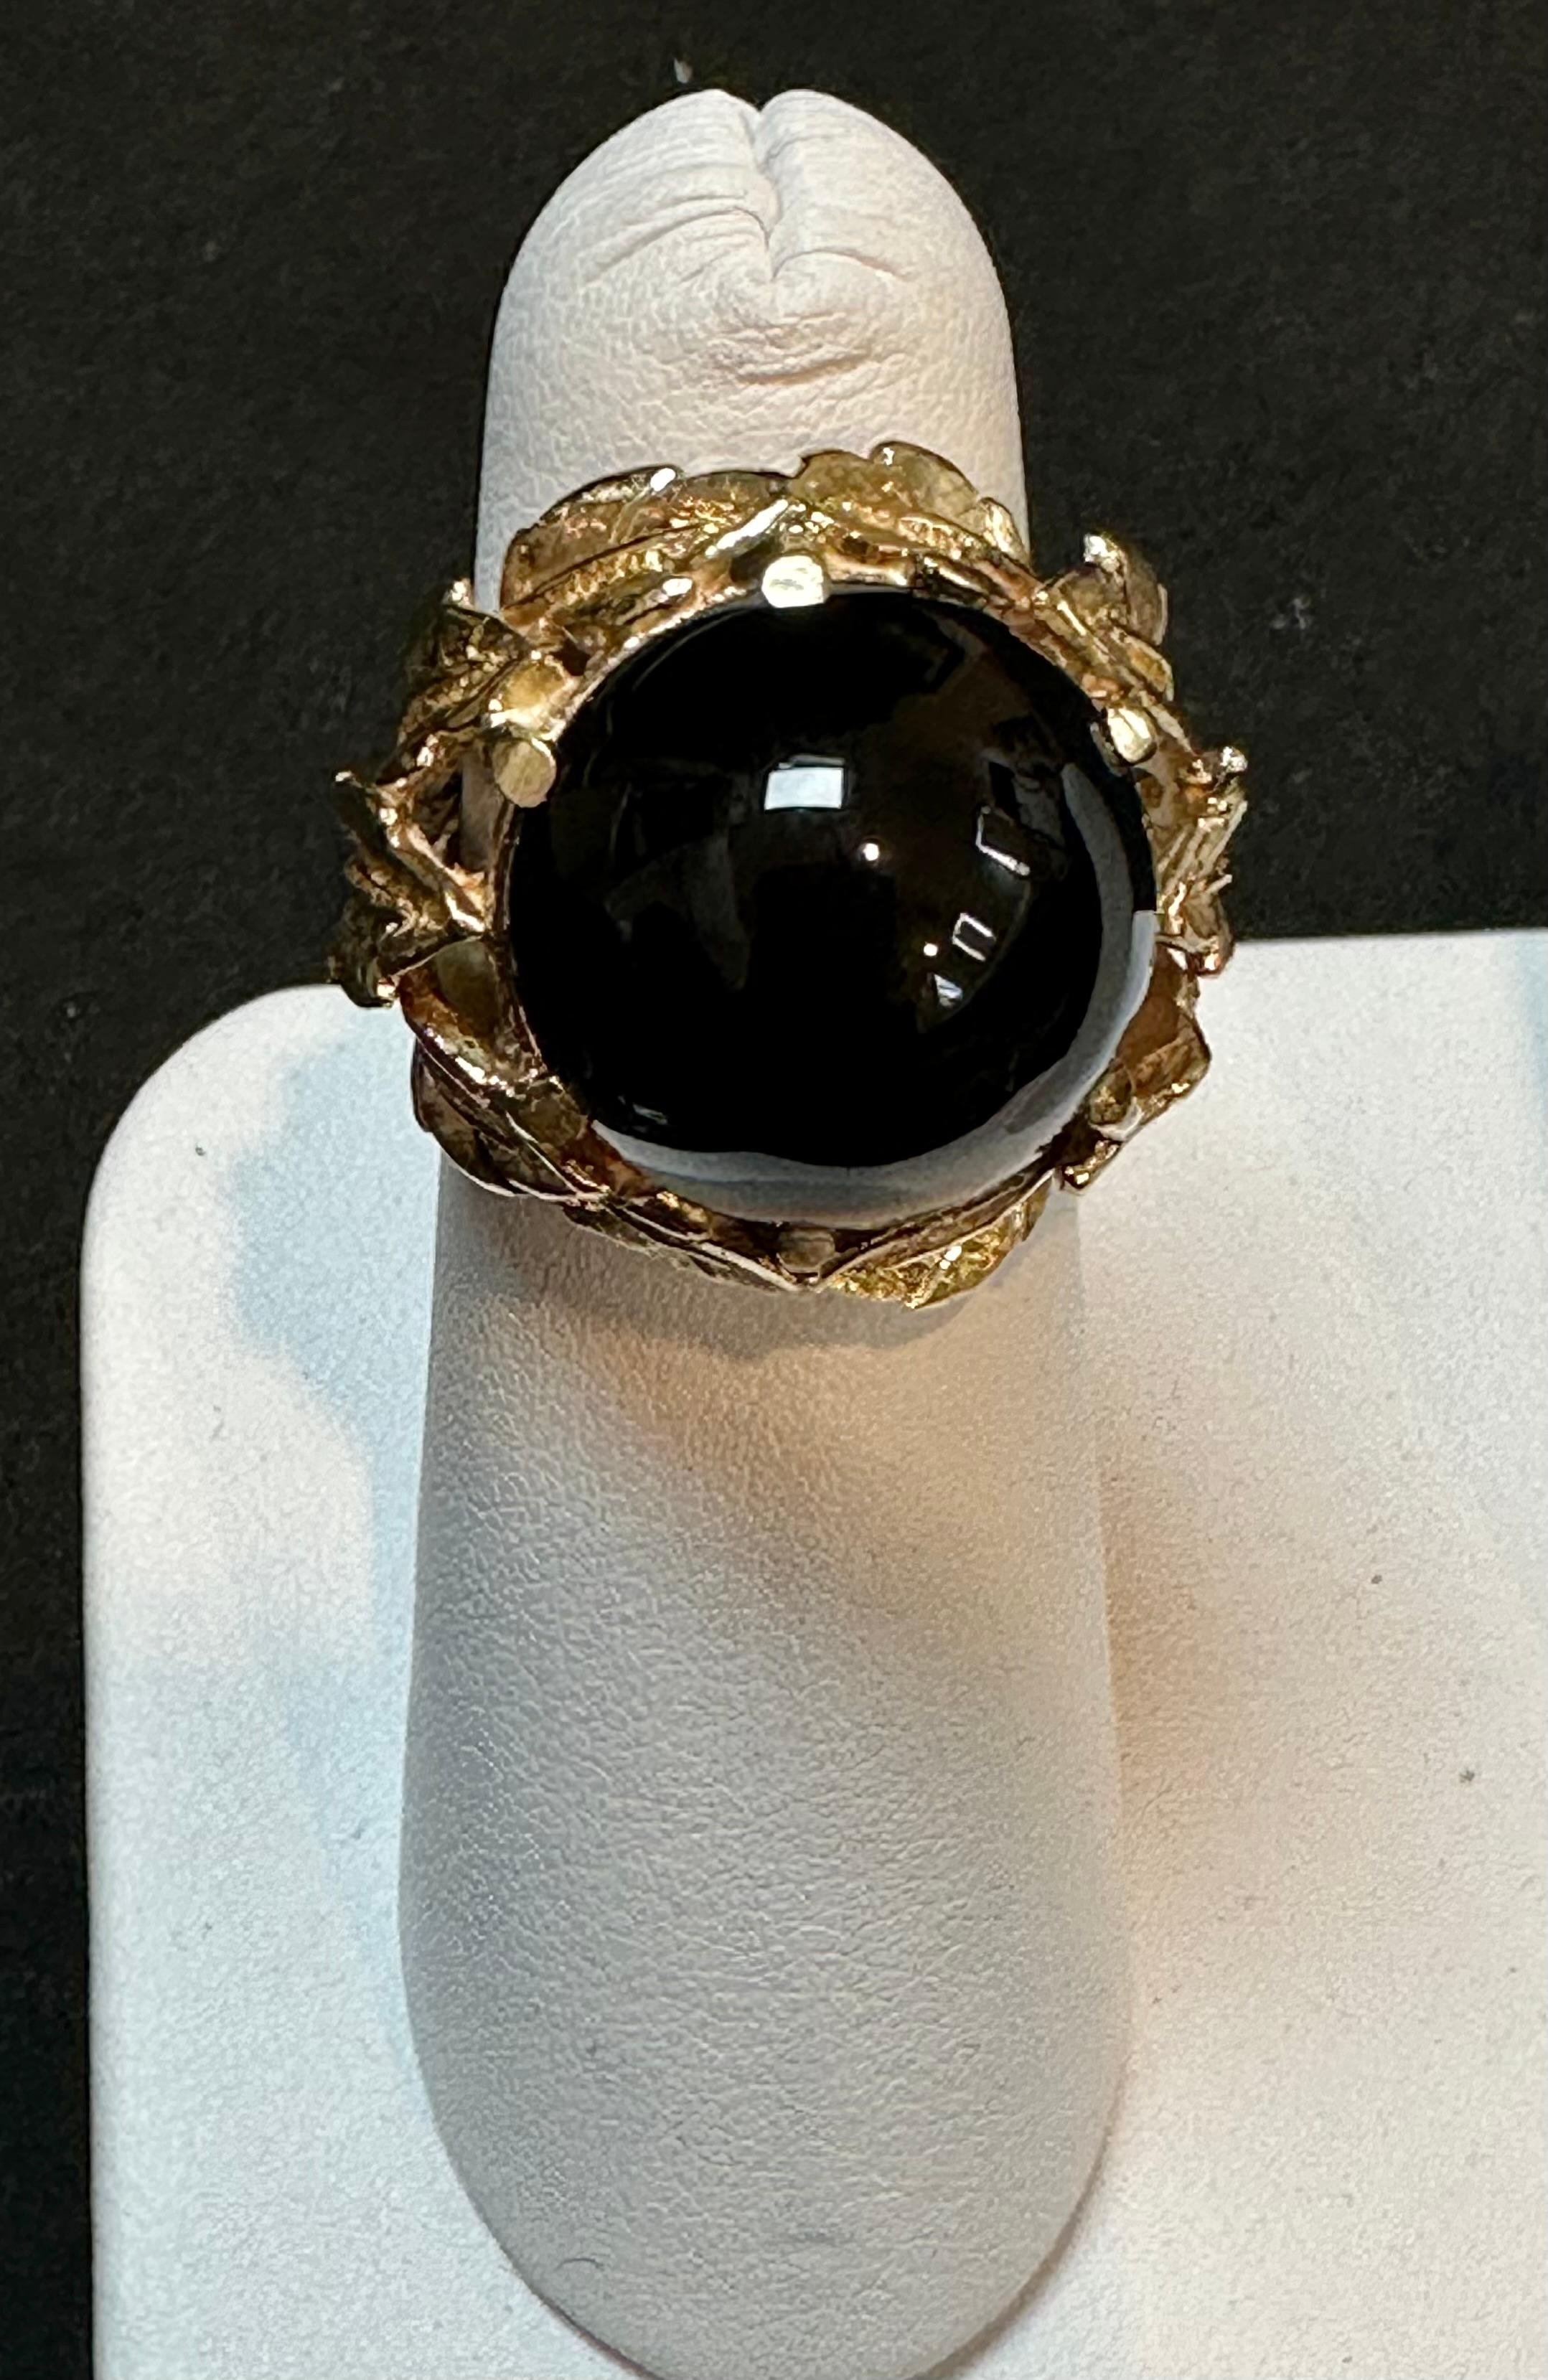 10 Carat Round Black Onyx Unisex Ring 14 Karat Yellow Gold Size 5.75 Excellent état - En vente à New York, NY